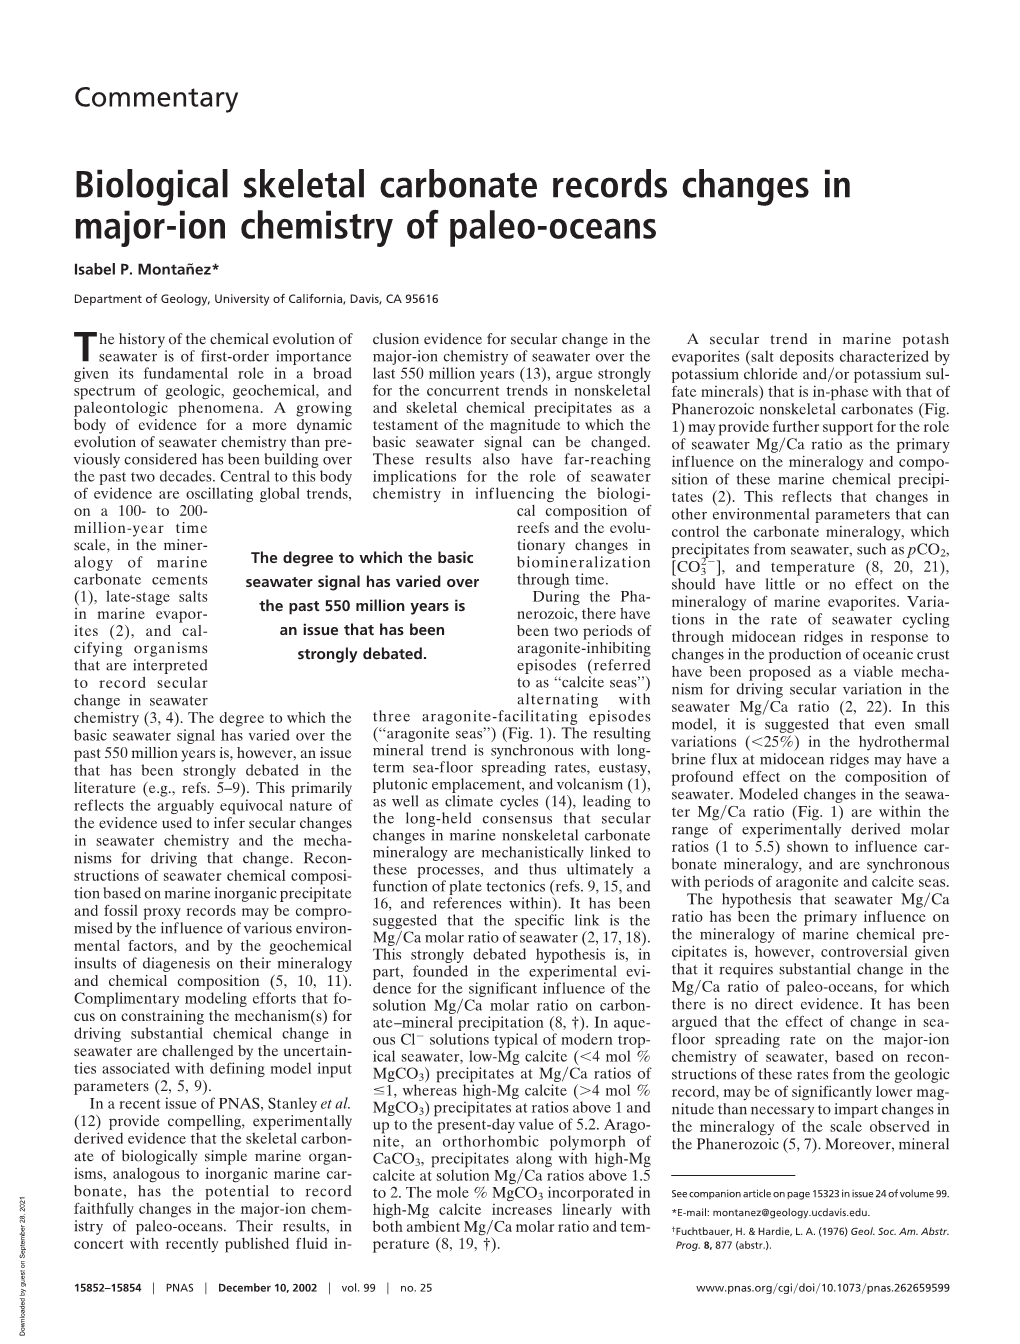 Biological Skeletal Carbonate Records Changes in Major-Ion Chemistry of Paleo-Oceans